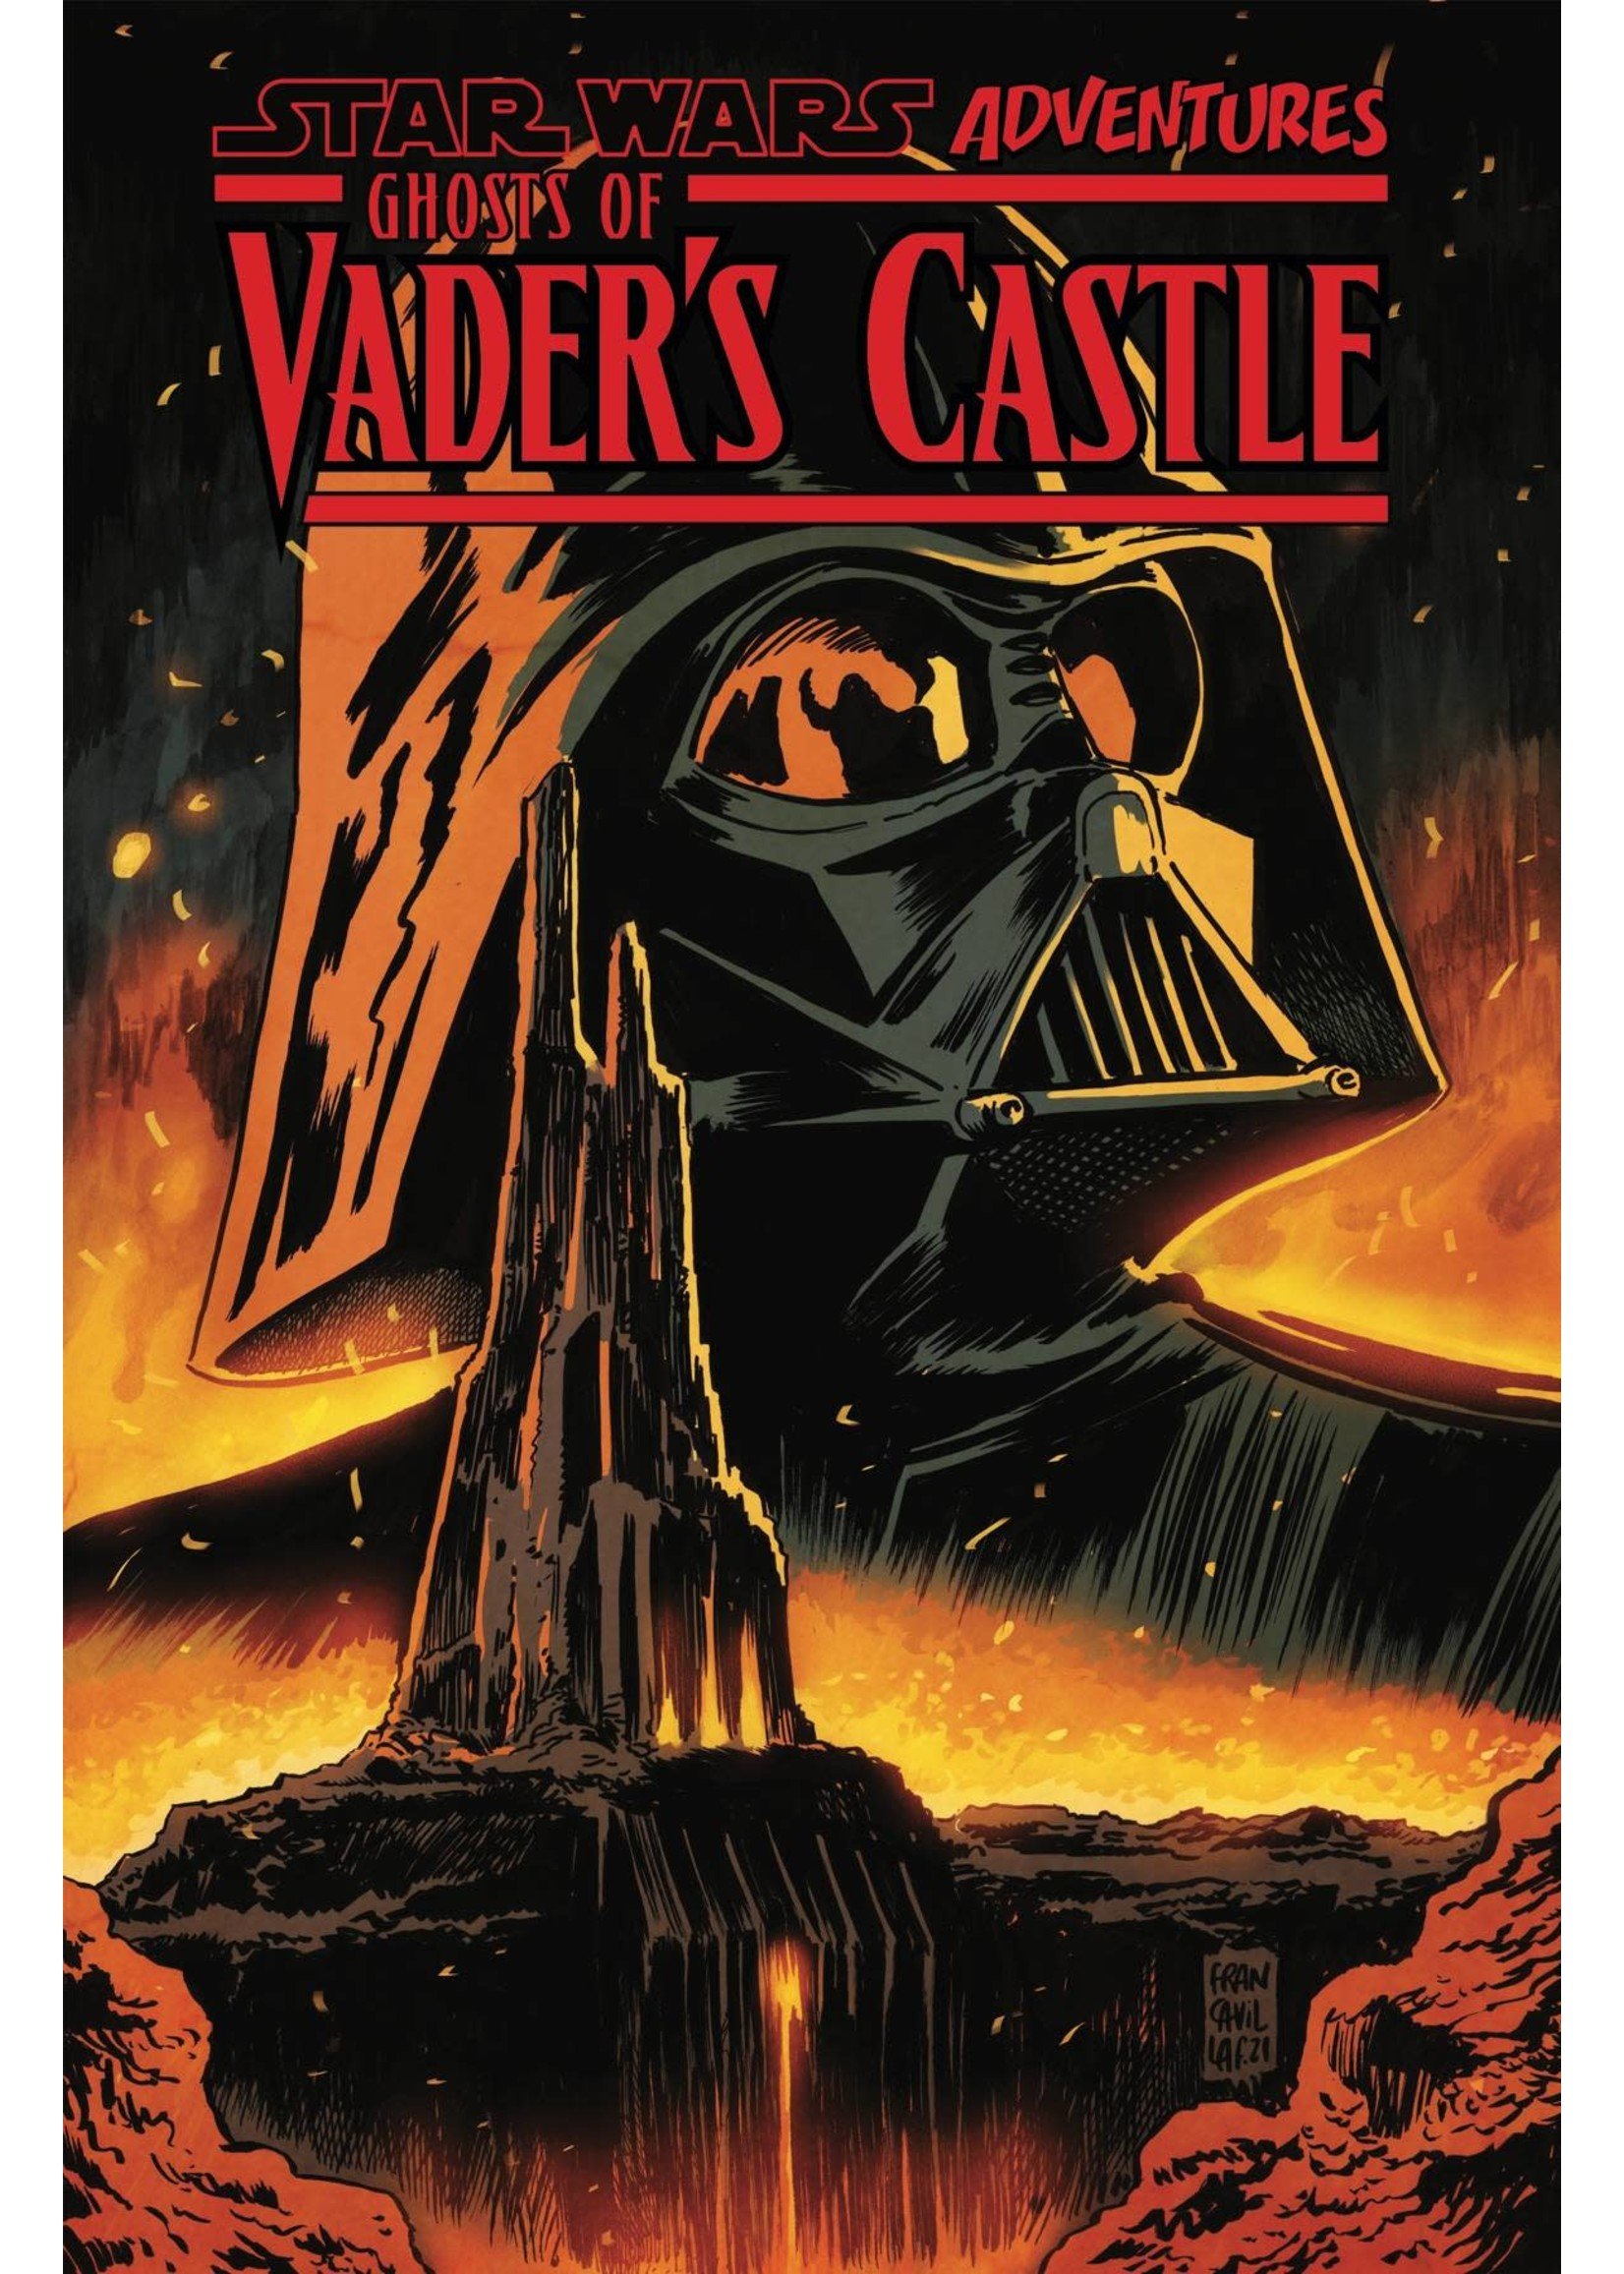 Star Wars Star Wars Adventures: Ghosts of Vader's Castle